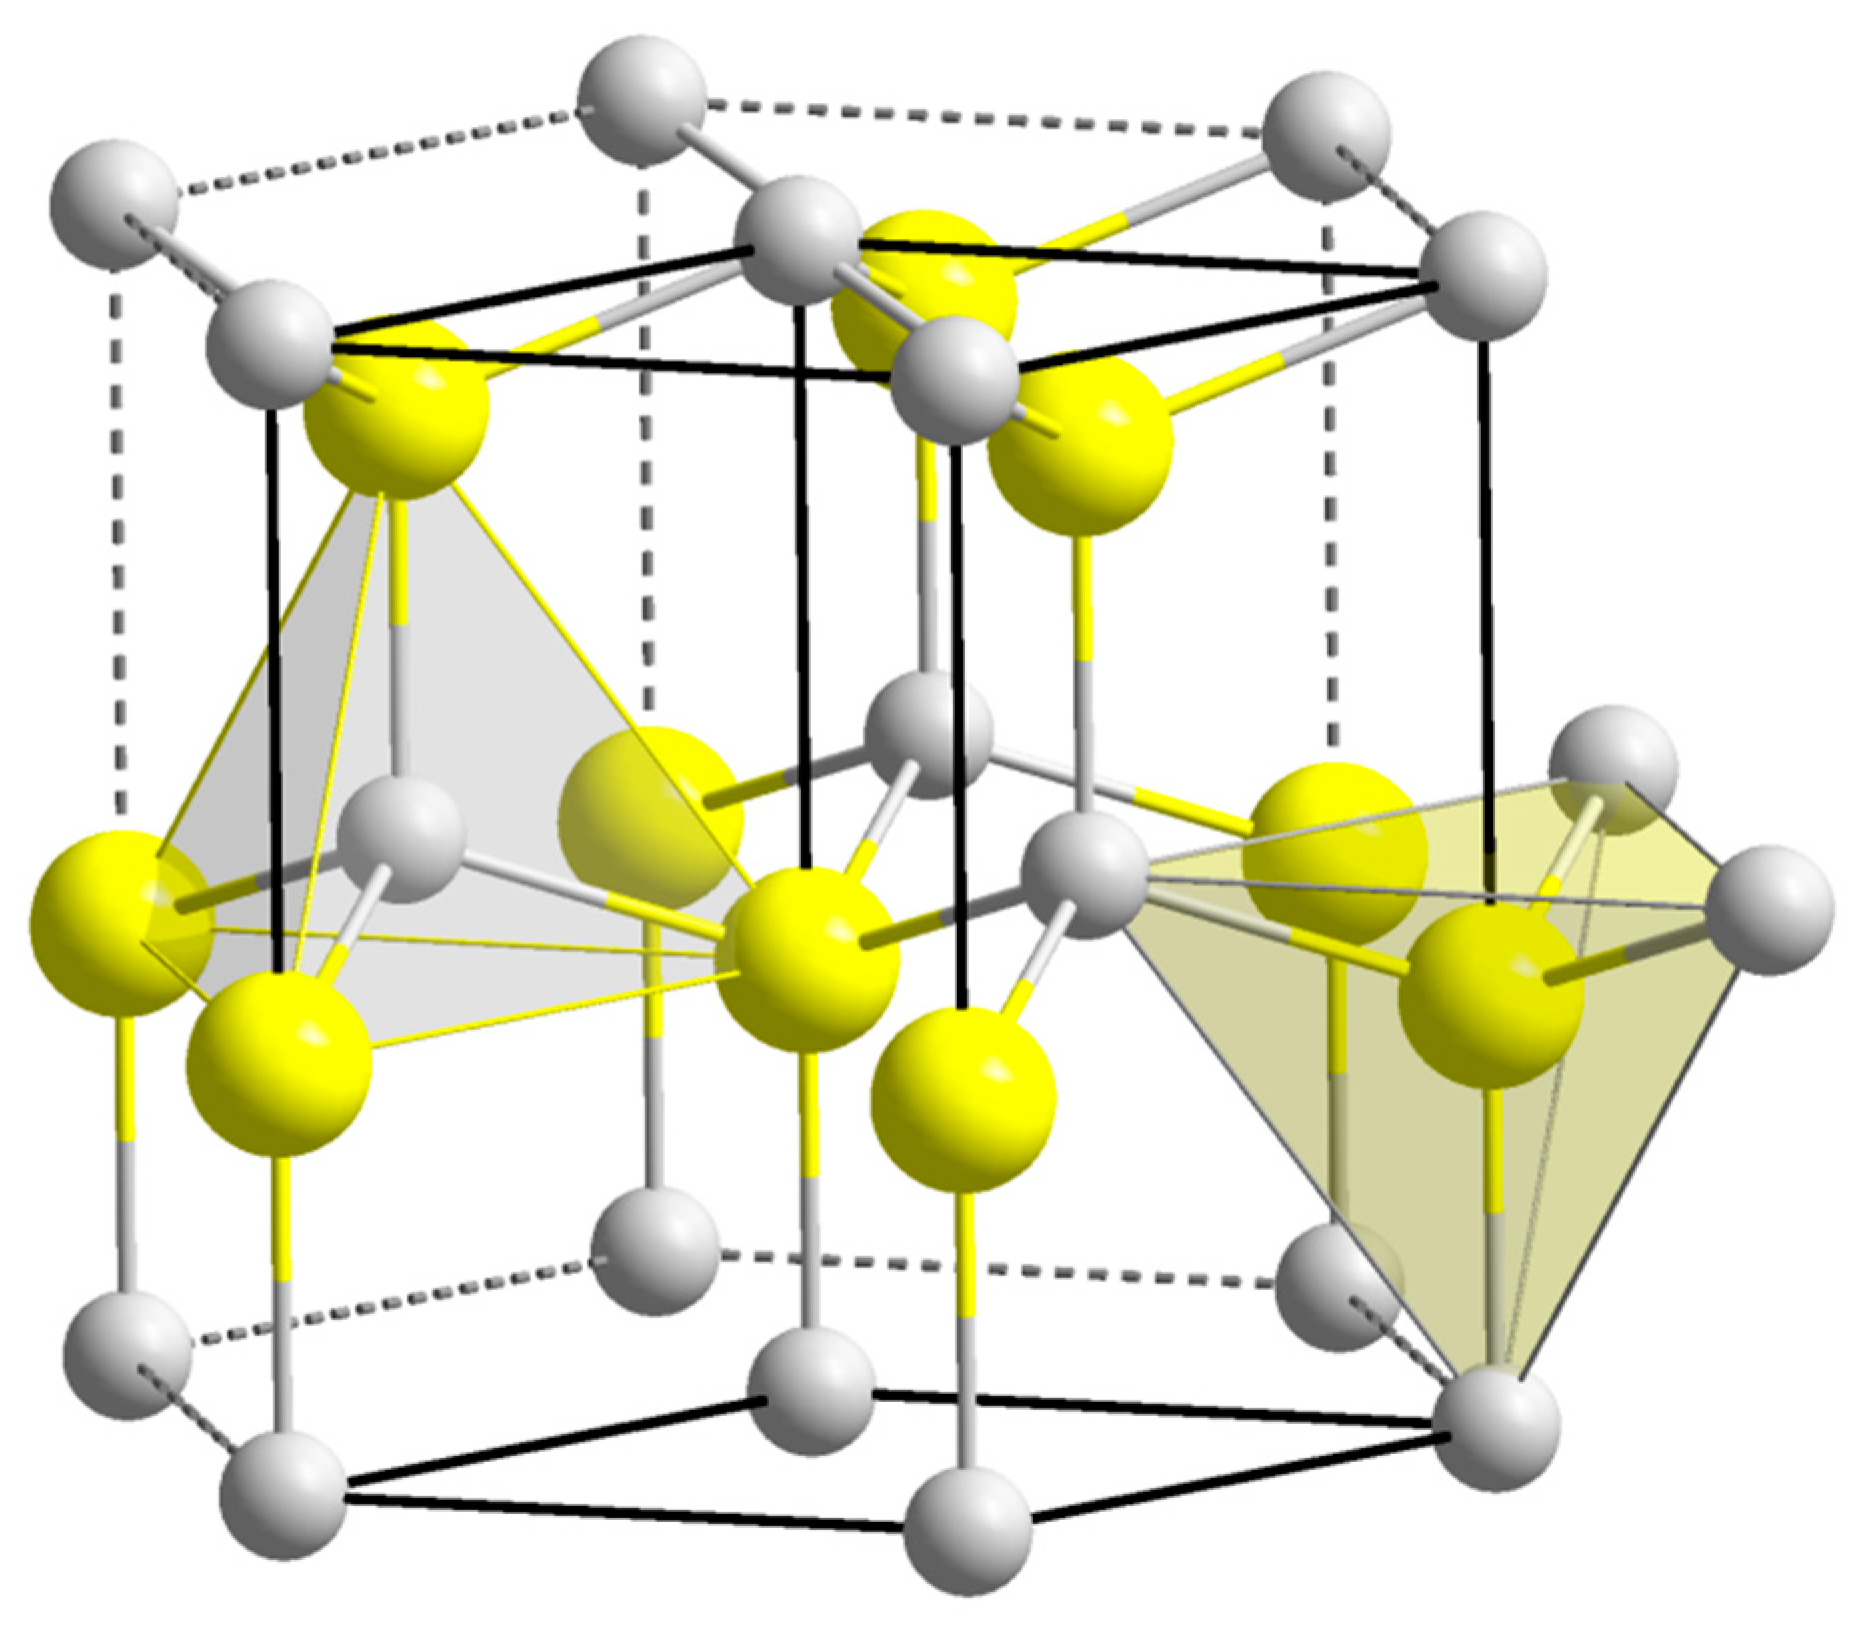 File:Stearic-acid-3D-balls.png - Wikipedia